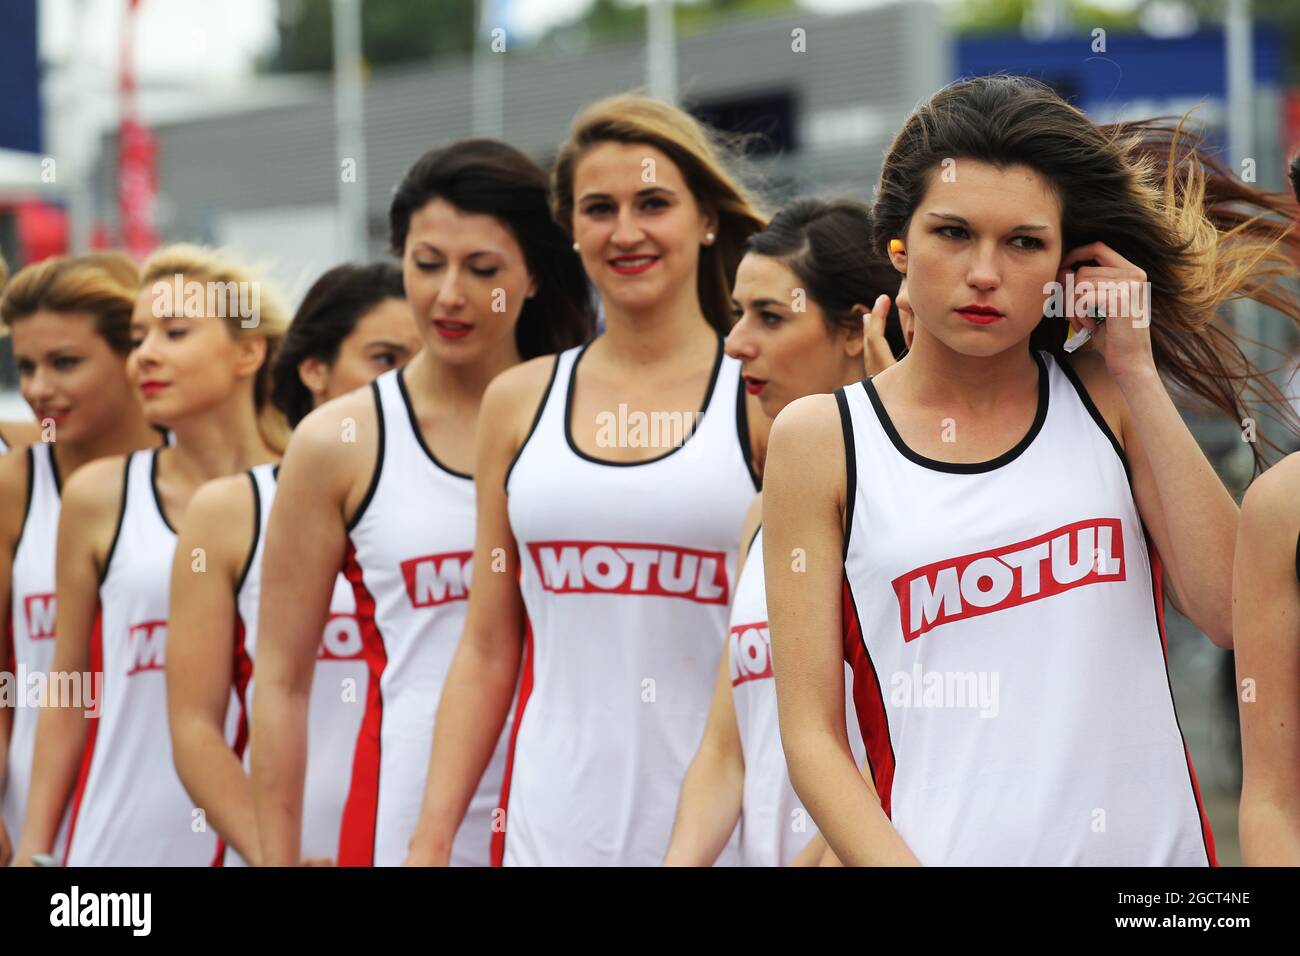 Motul girls. Le Mans 24 Hours Race, Saturday 22nd June 2013. Le Mans, France. Stock Photo